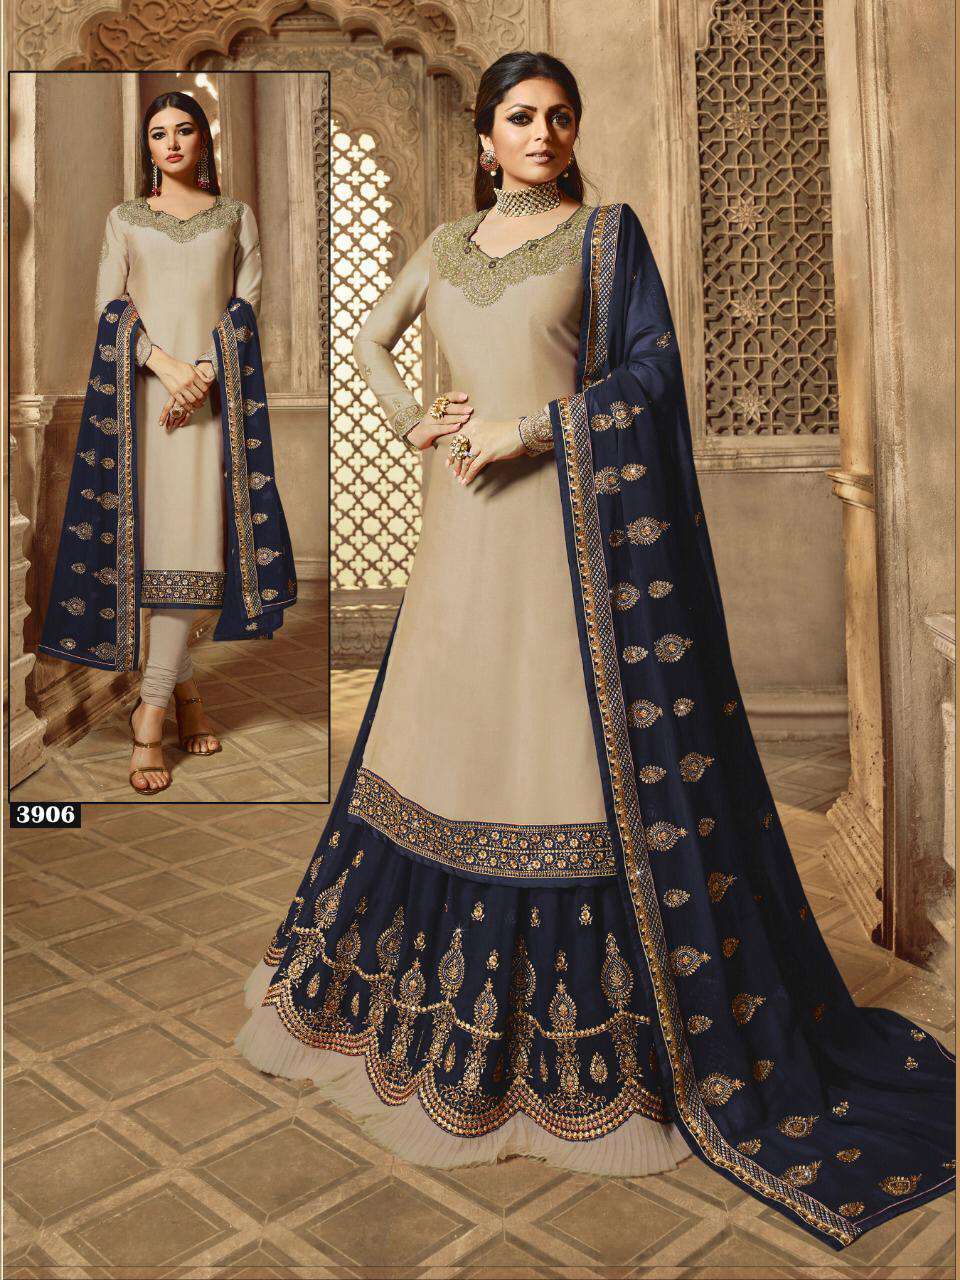 Palkhi Fashion | Indian Clothes Online in USA | Clothing Store Houston |  Pakistani bridal dresses, Bridal outfits, Pakistani wedding outfits